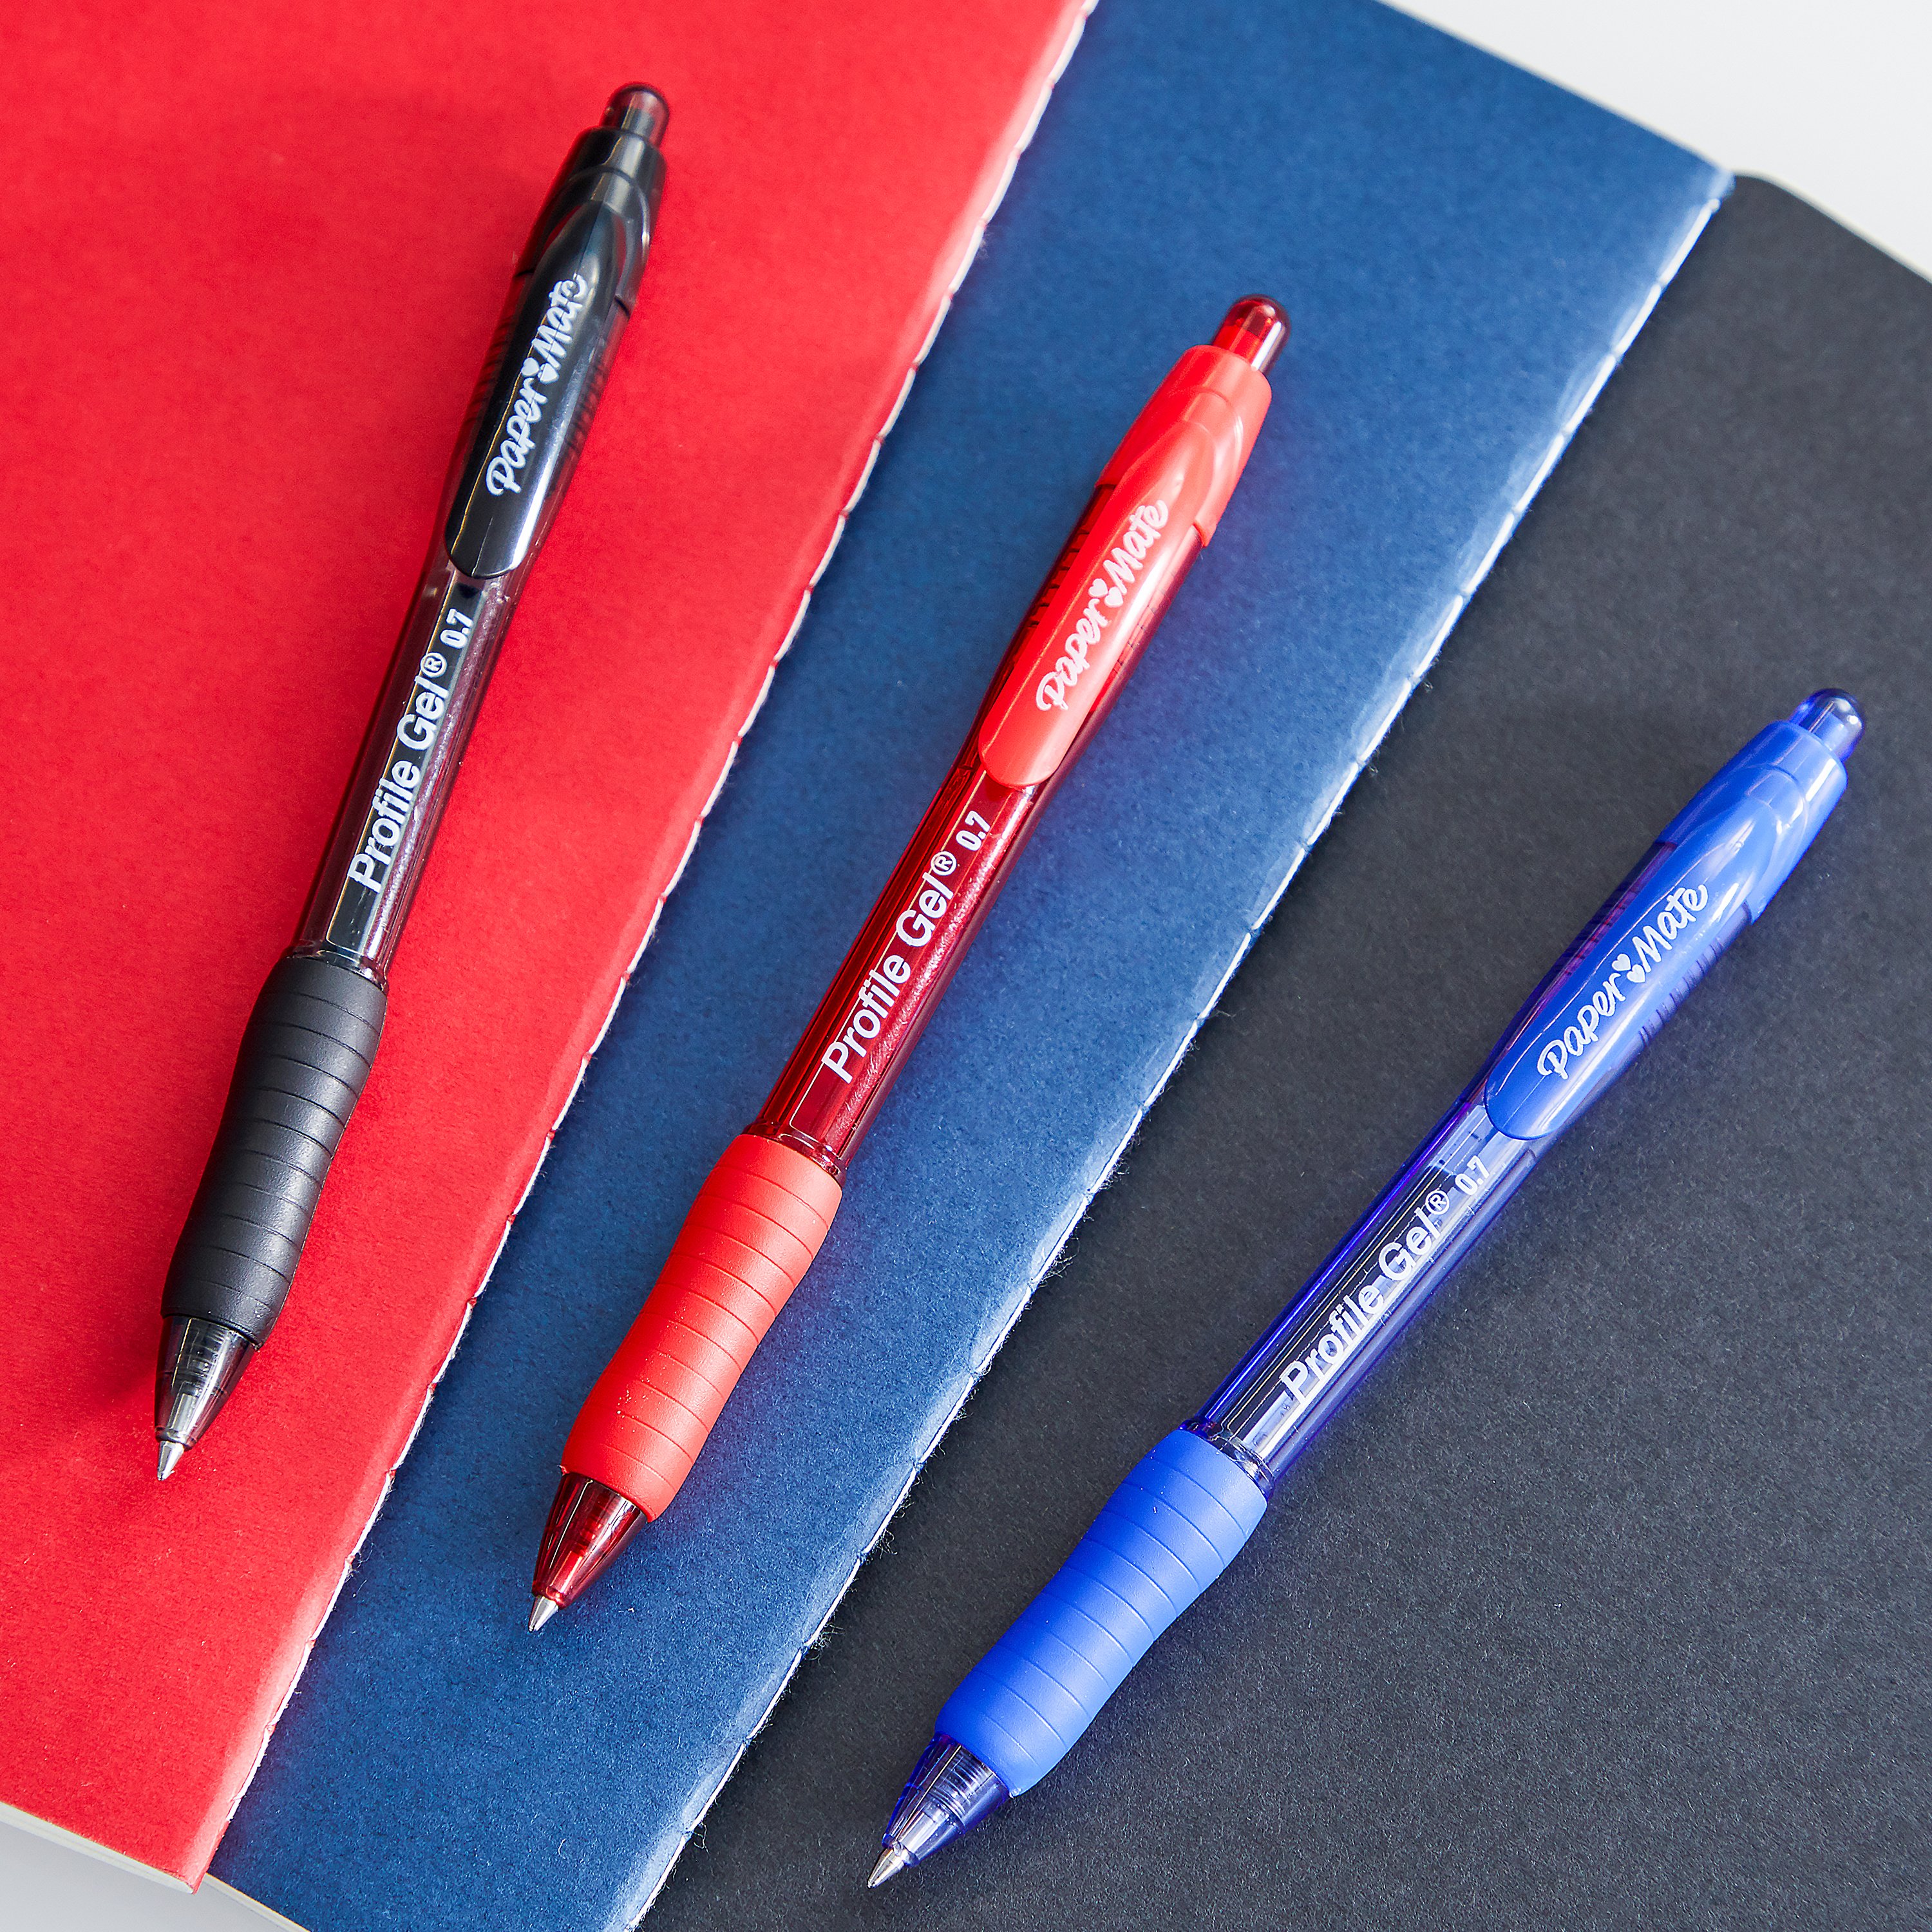 20 Pack Retractable Gel Pens (0.5 mm Extra Fine Tip) – Paperage